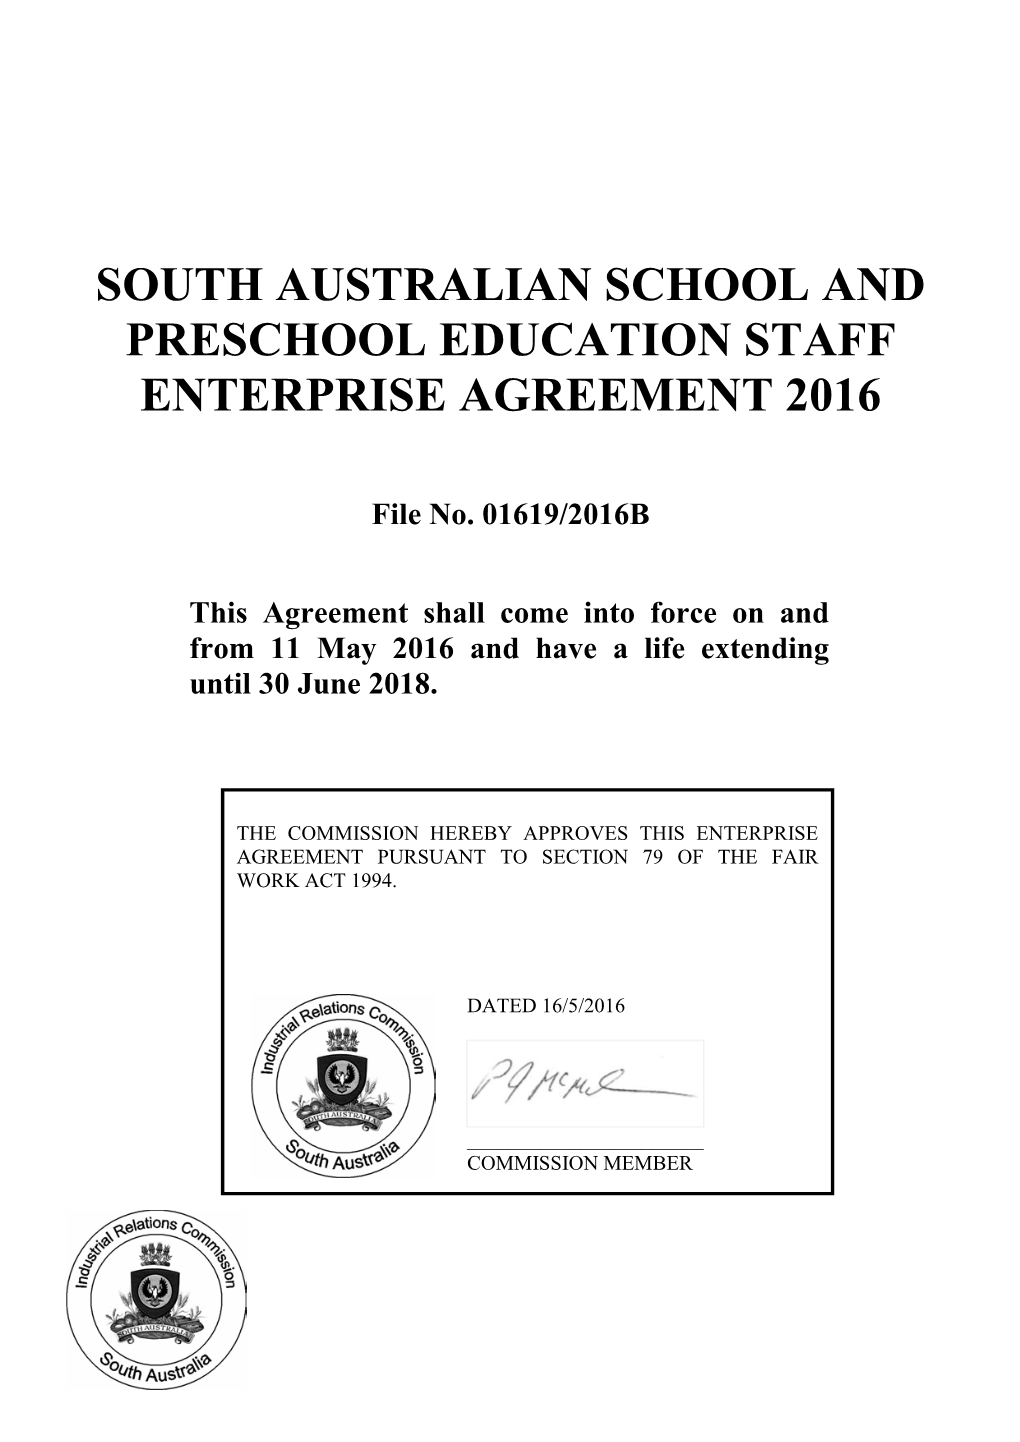 South Australian School and Preschool Education Staff Enterprise Agreement 2016